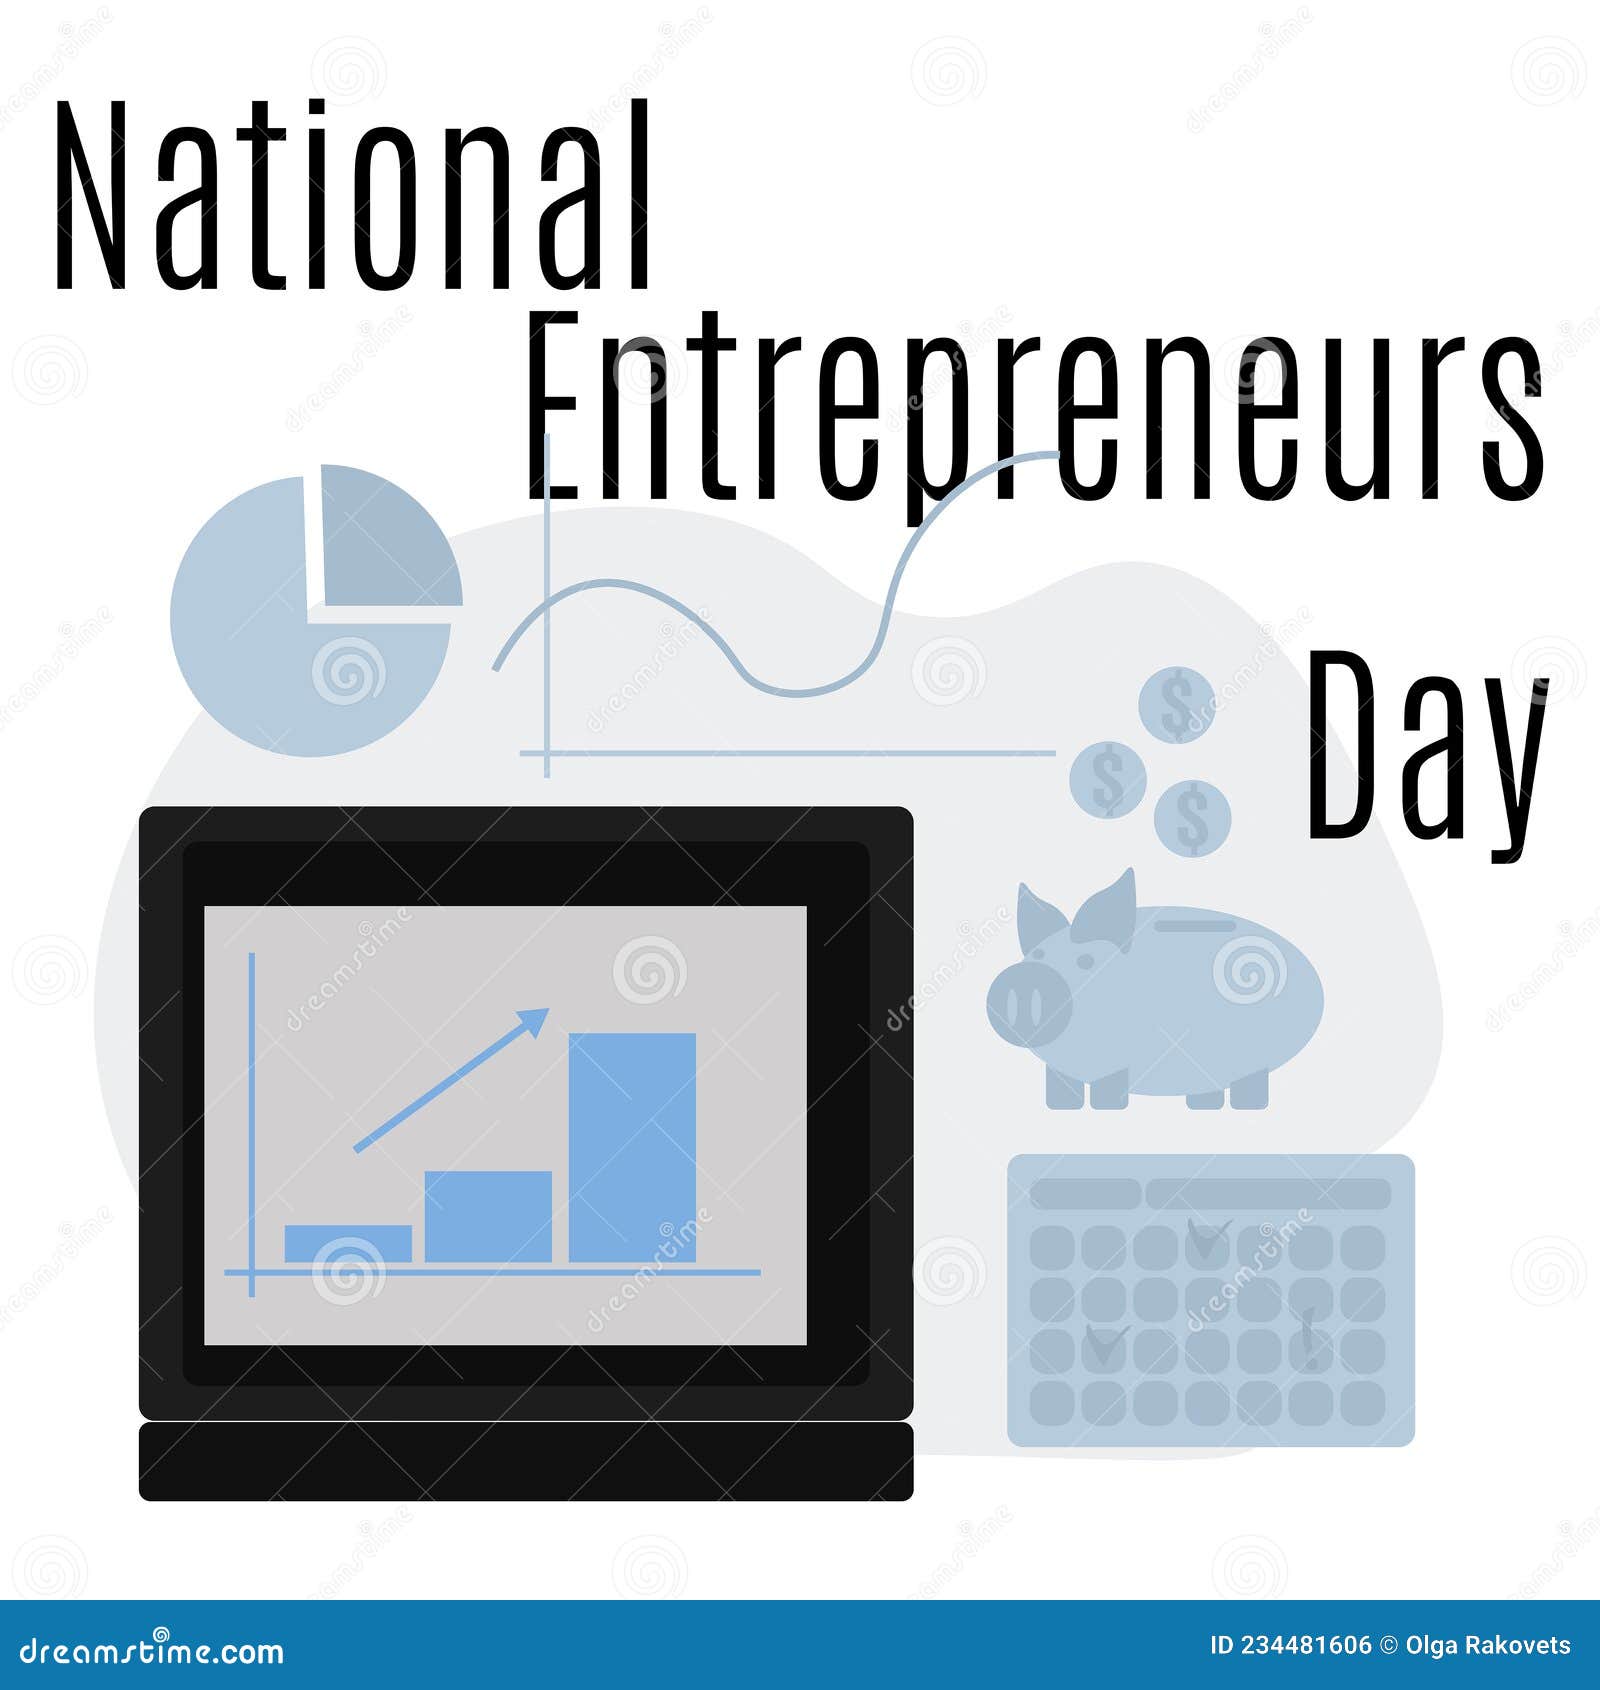 national entrepreneurs day, idea for poster, banner, flyer or postcard